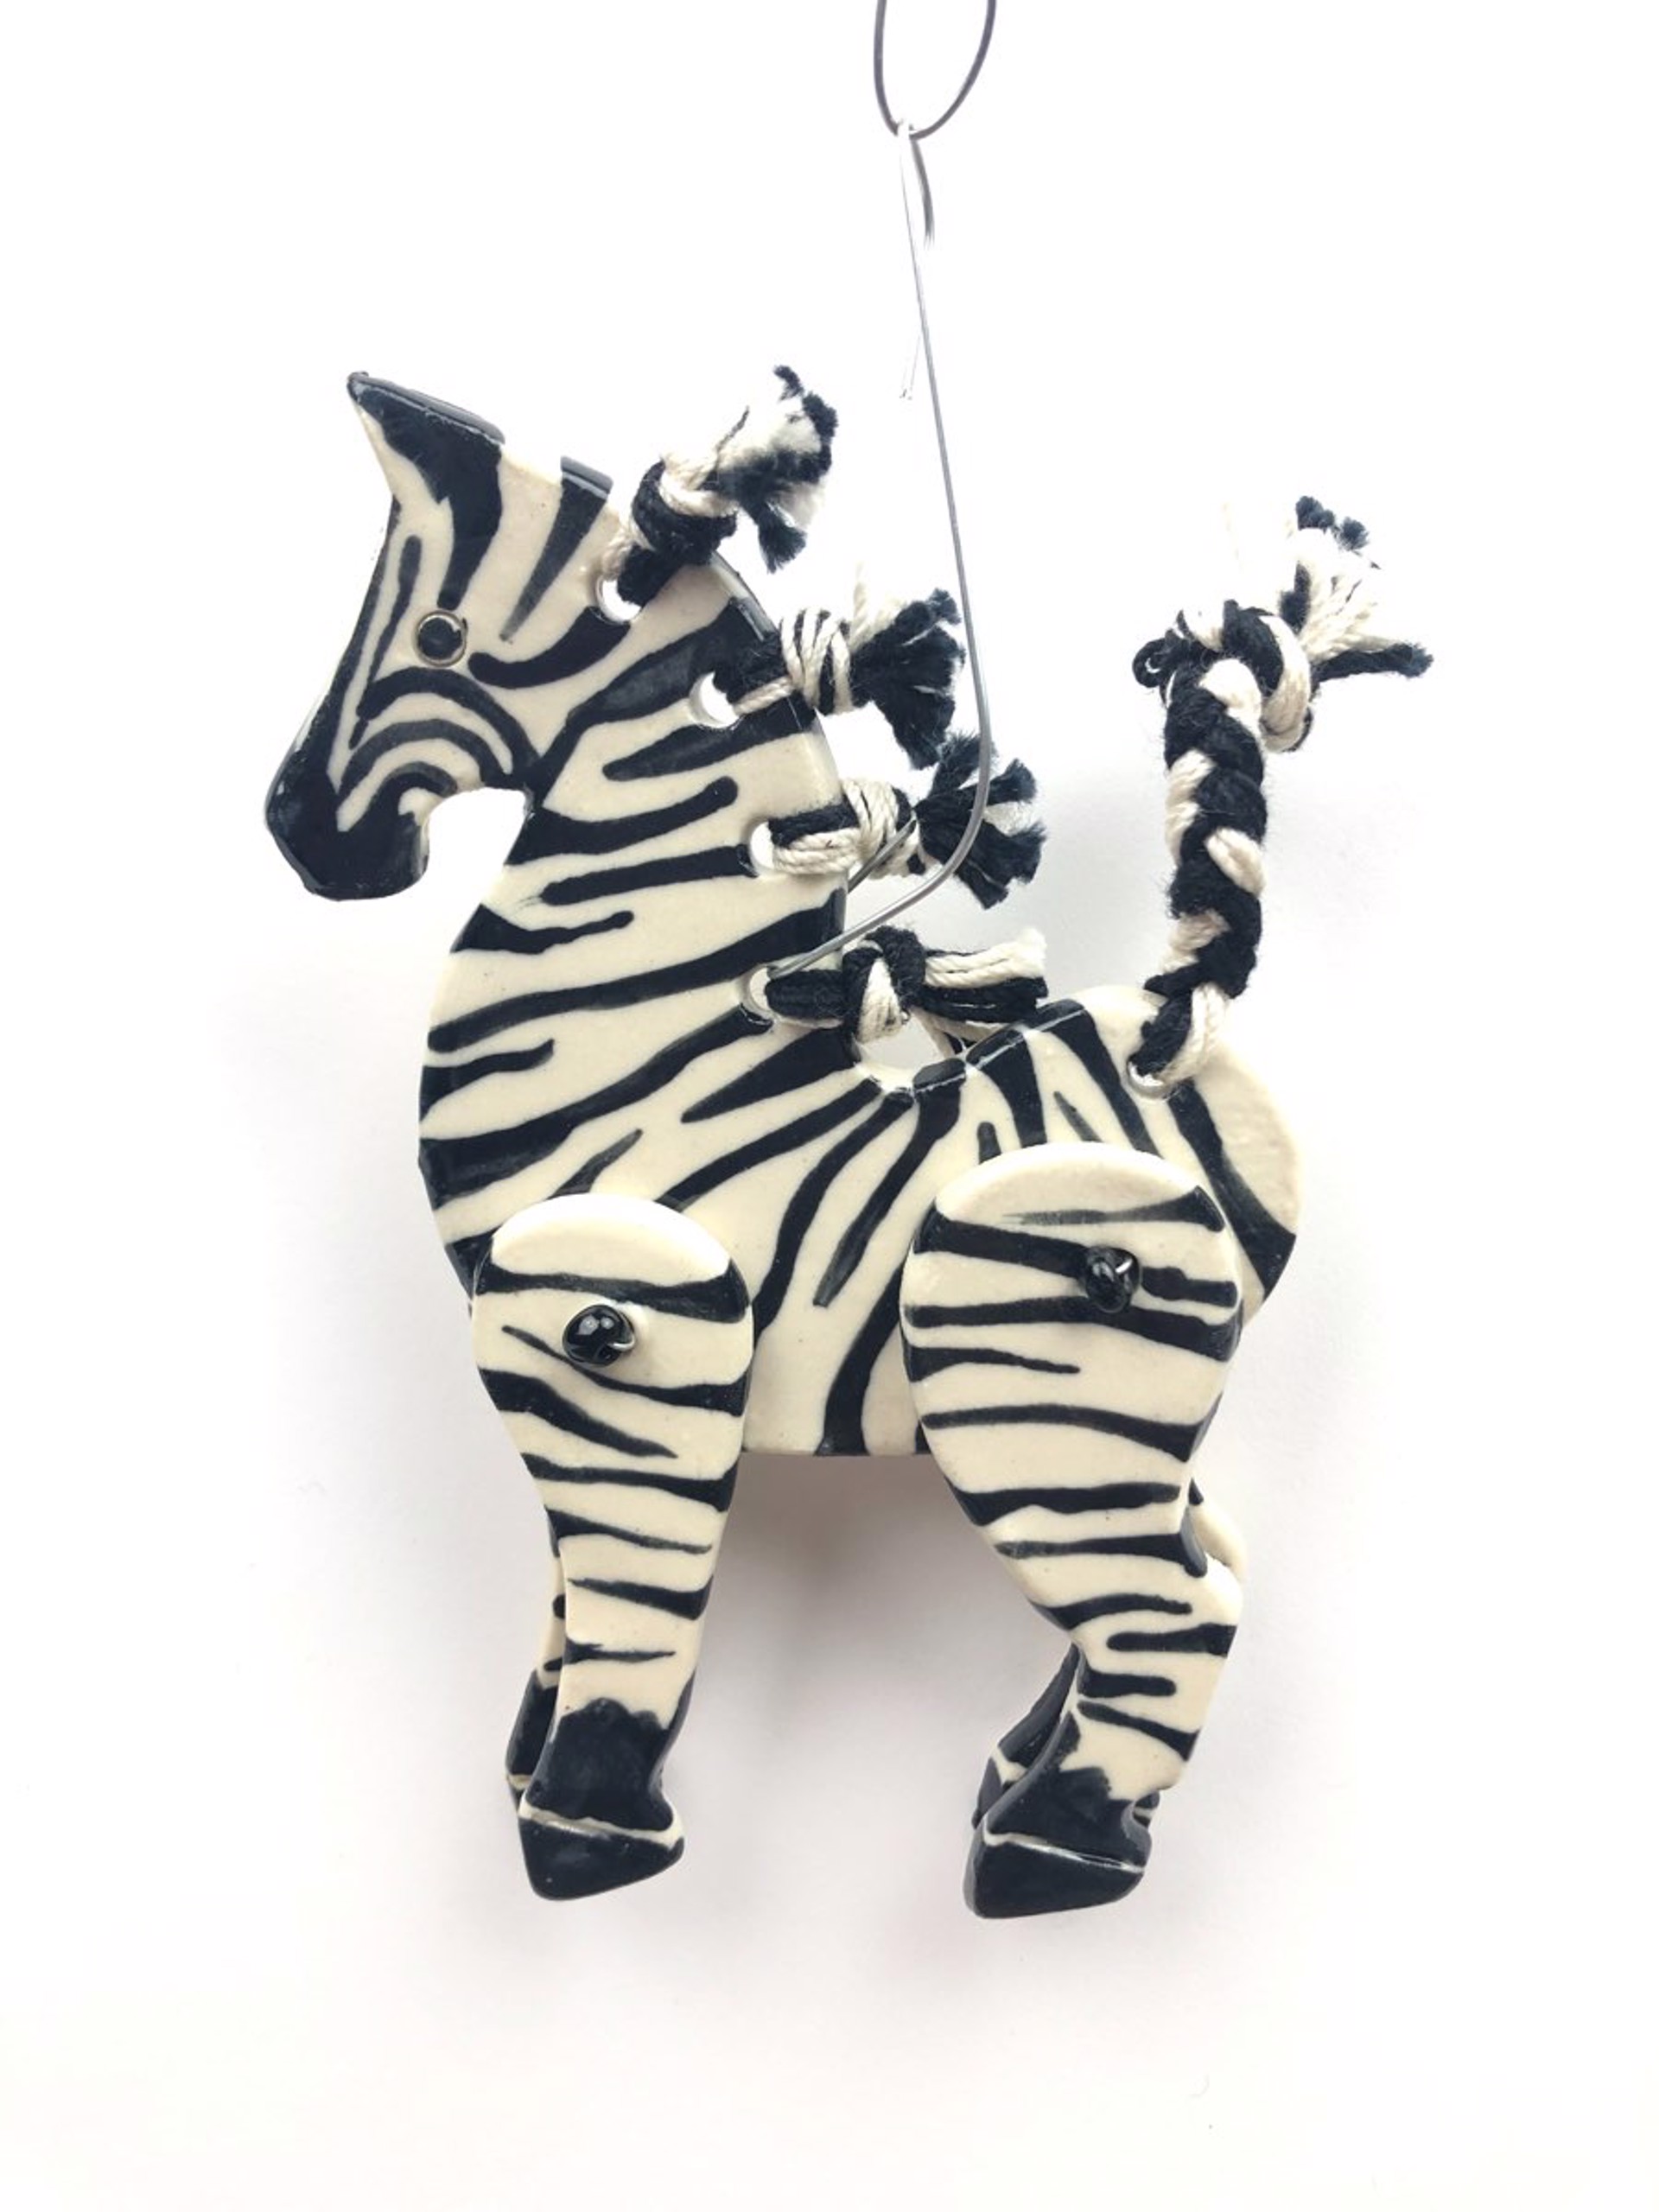 Zebra Ornament by Nancy Jacobsohn